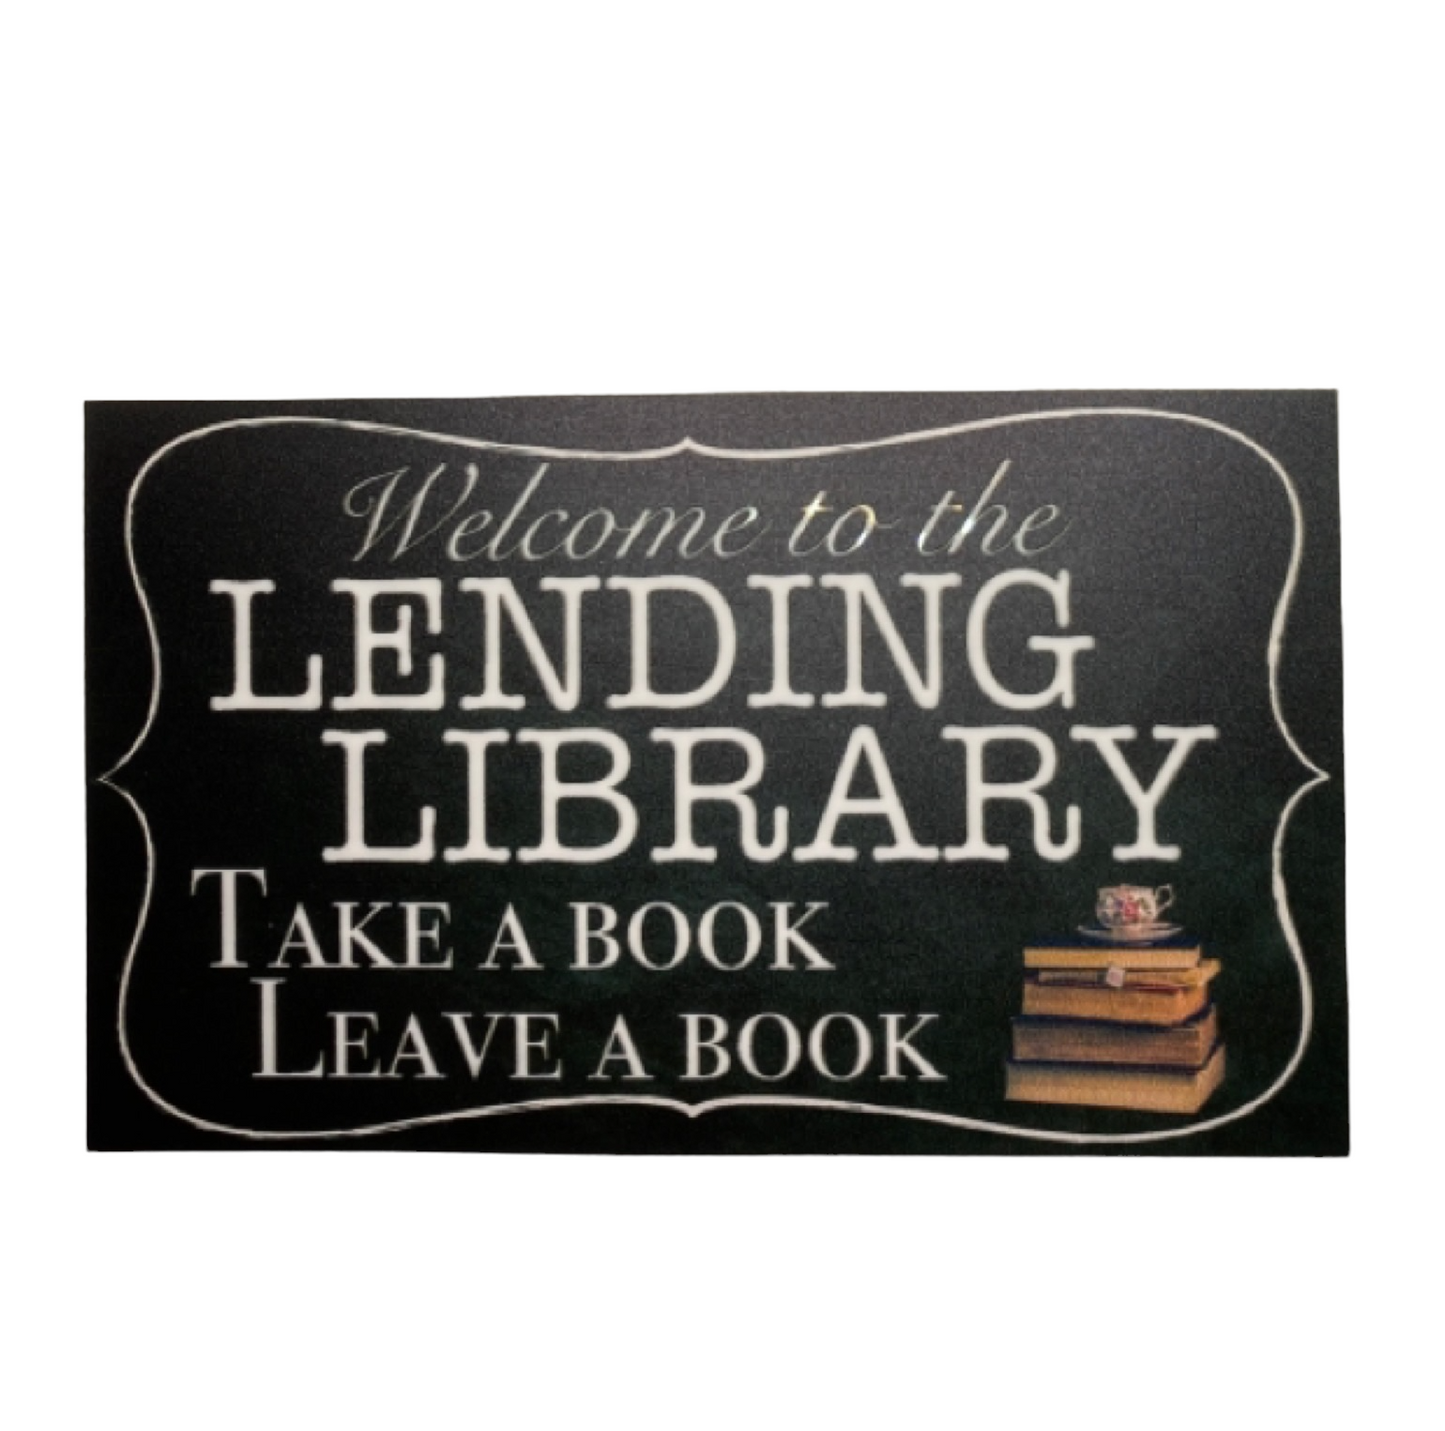 Lending Library Street Book Borrow Sign